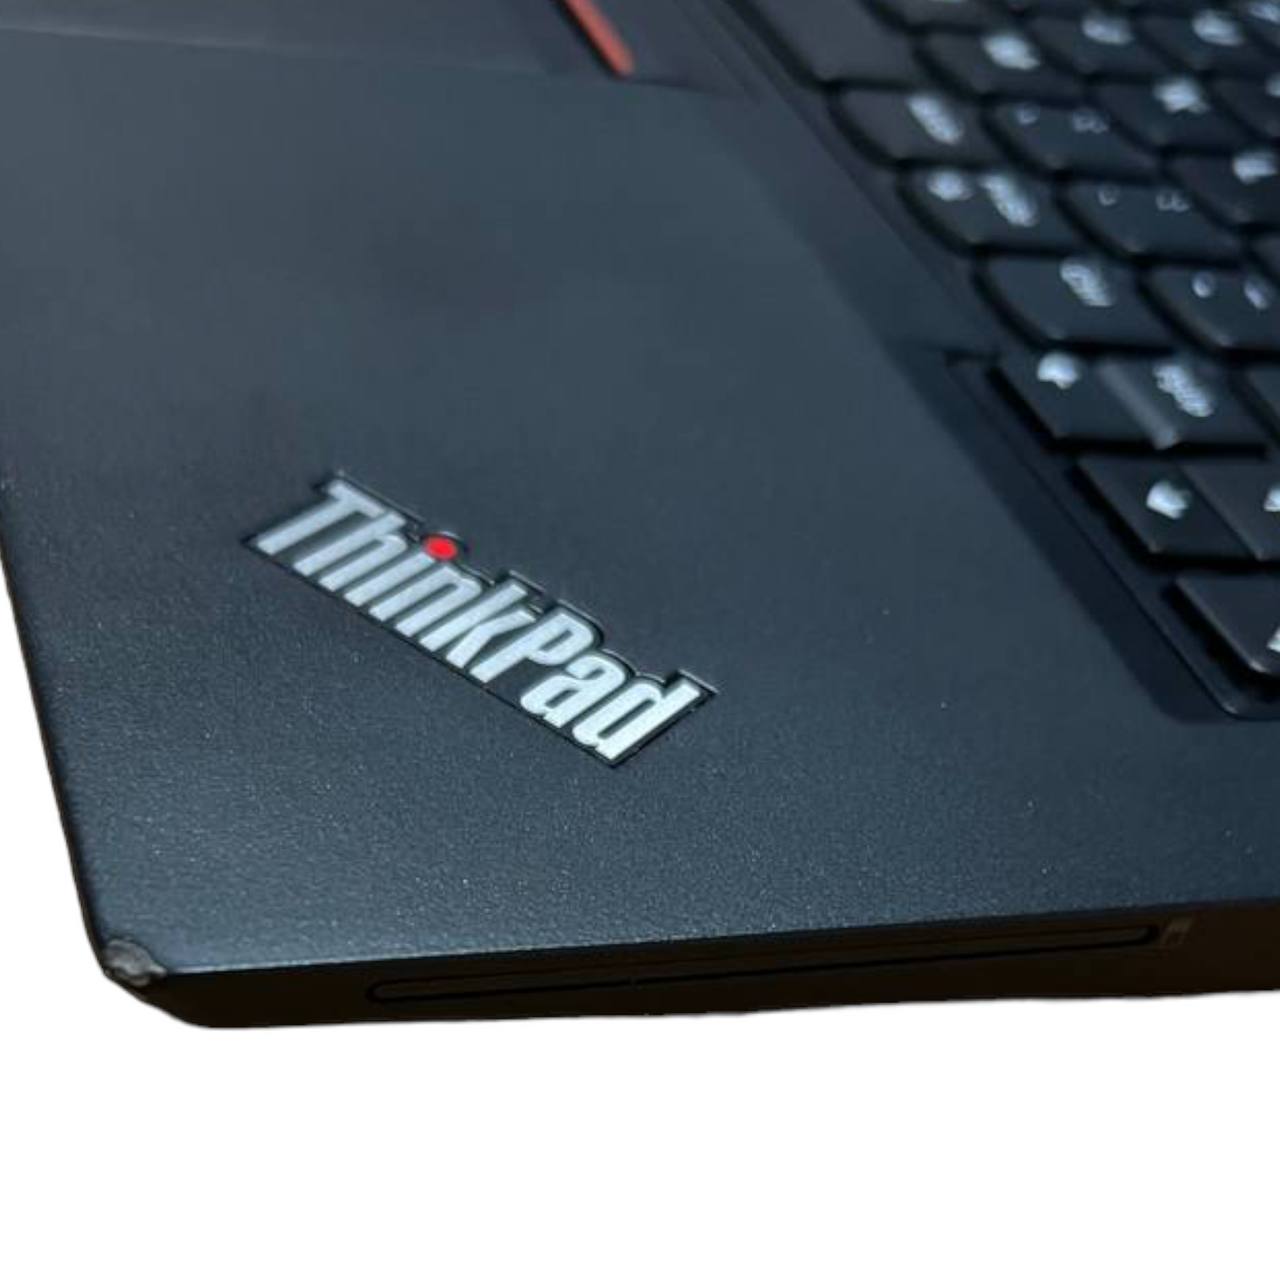 Lenovo Thinkpad T470S, con Intel Core i5-6300u 2.4Ghz, 14" (2342643) Grado b